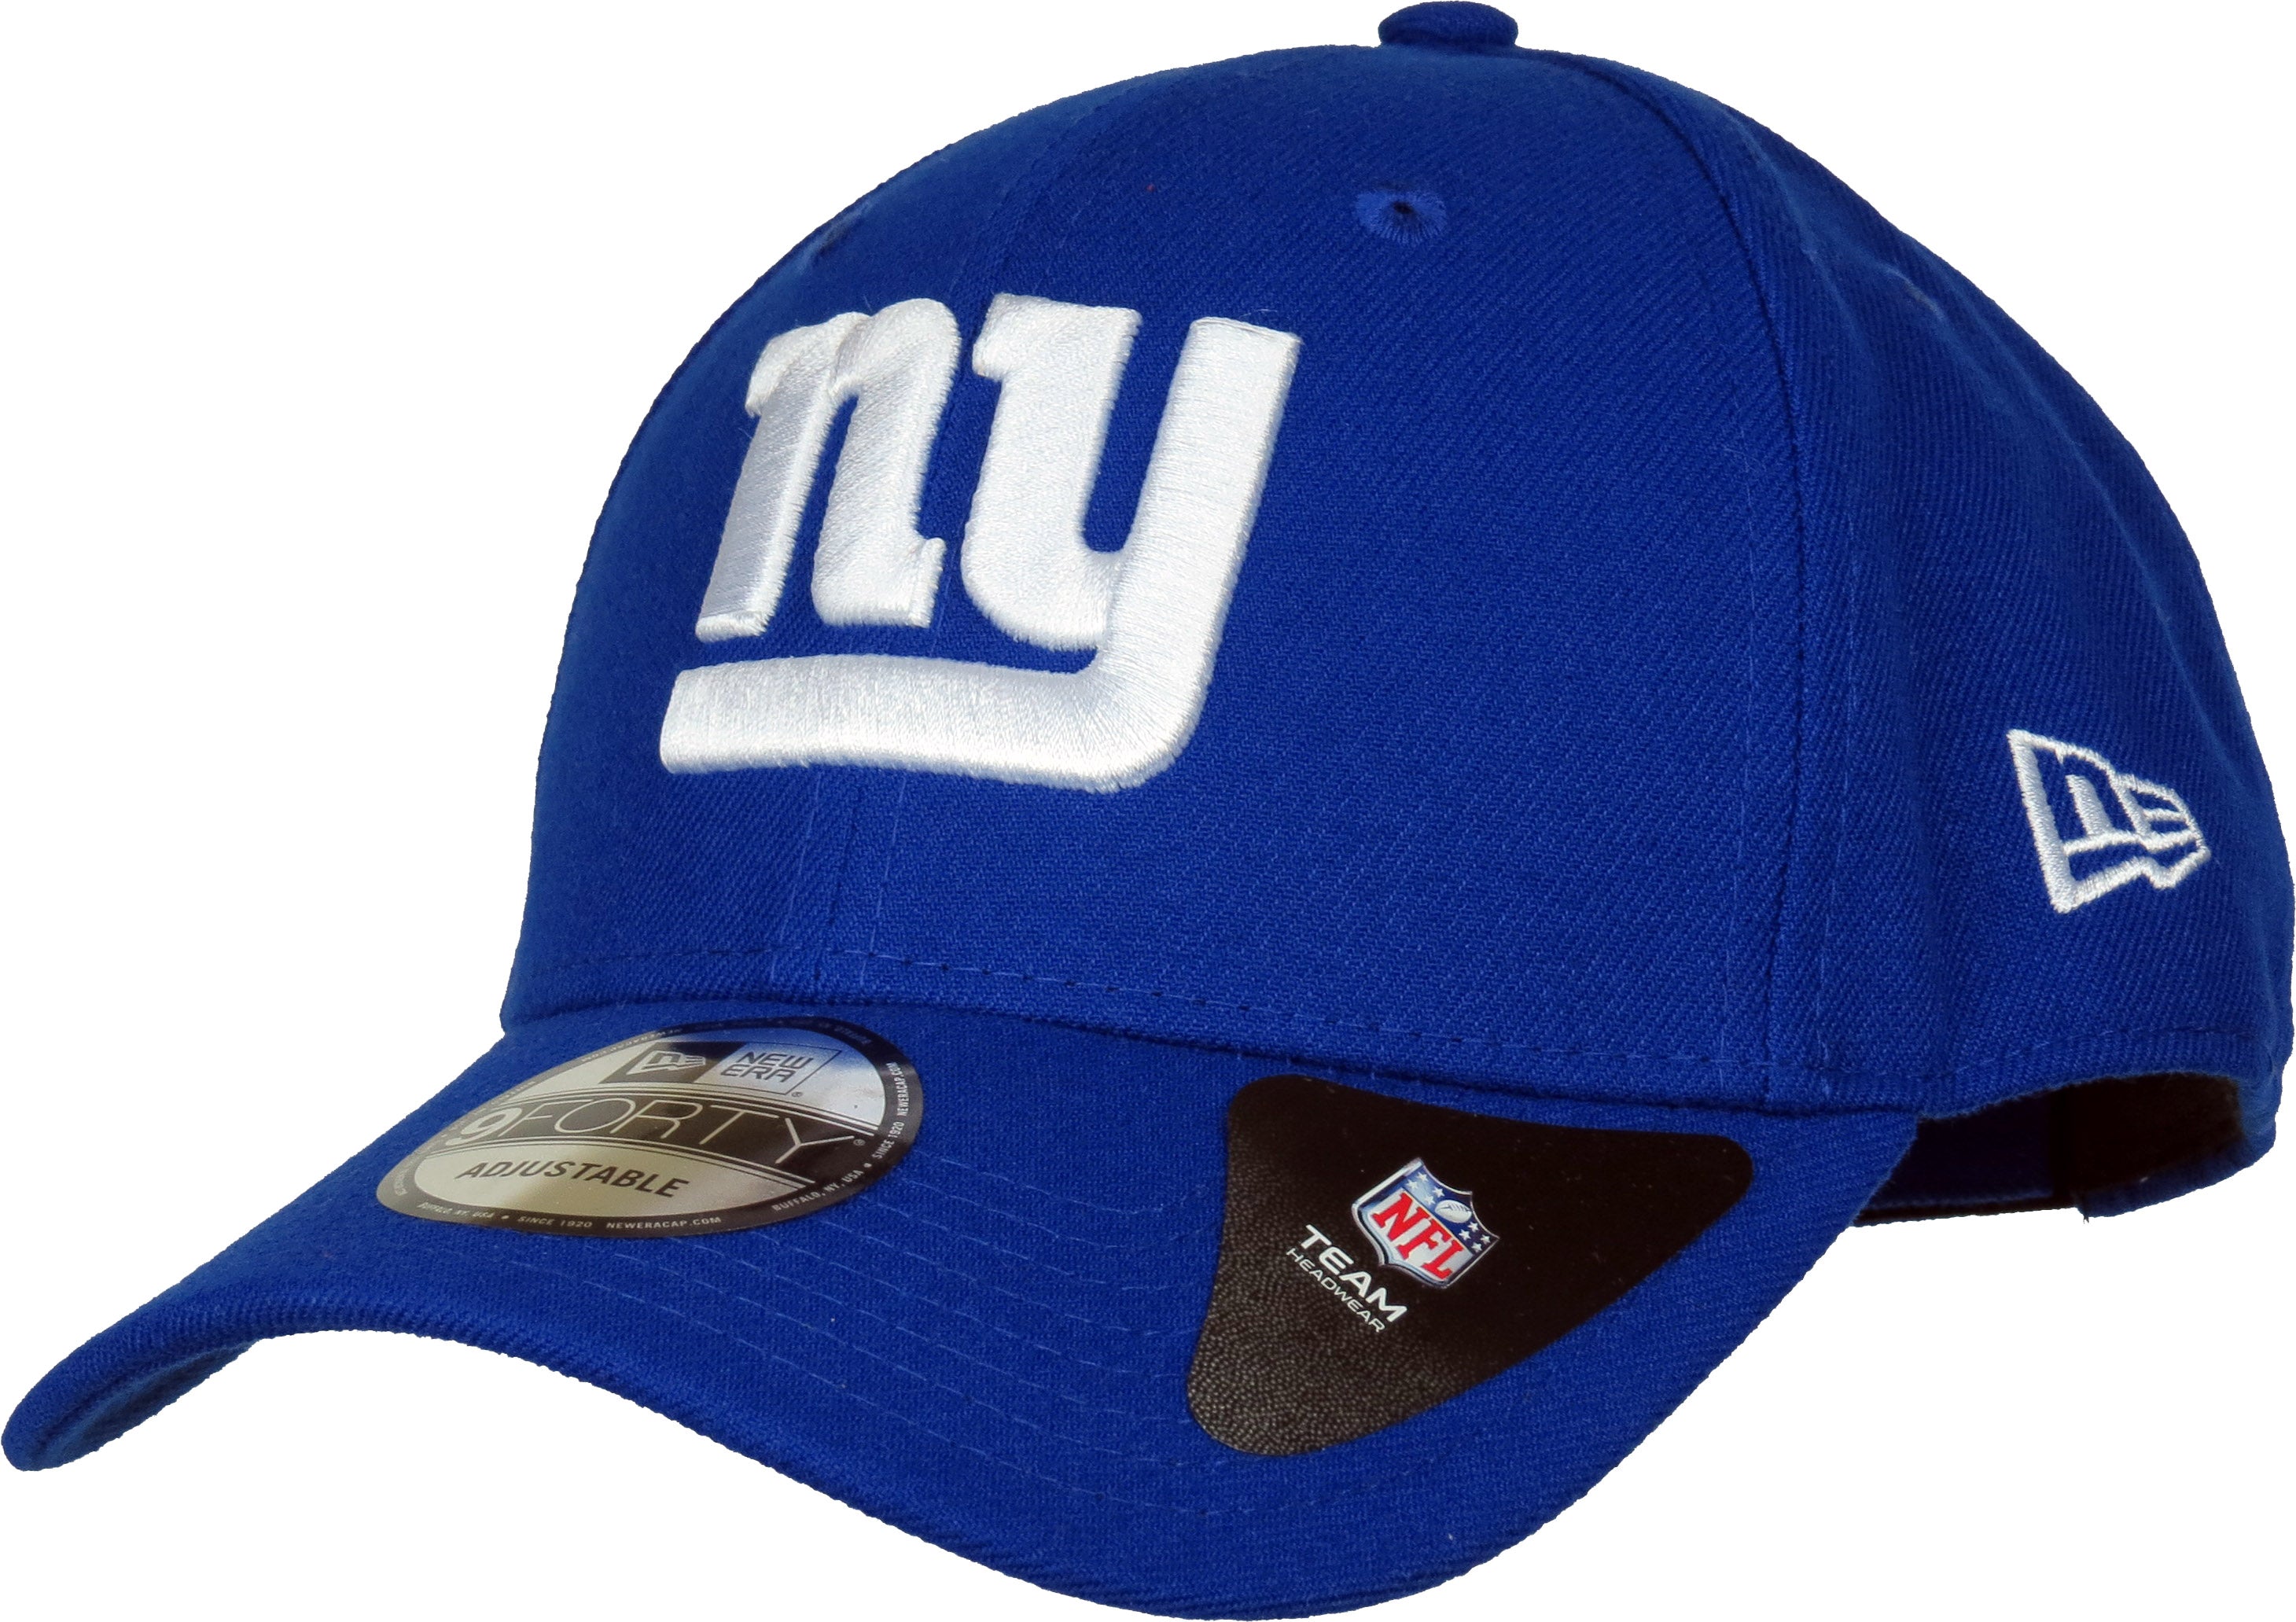 | York League New Era New lovemycap The Giants Adjustable NFL Cap 940